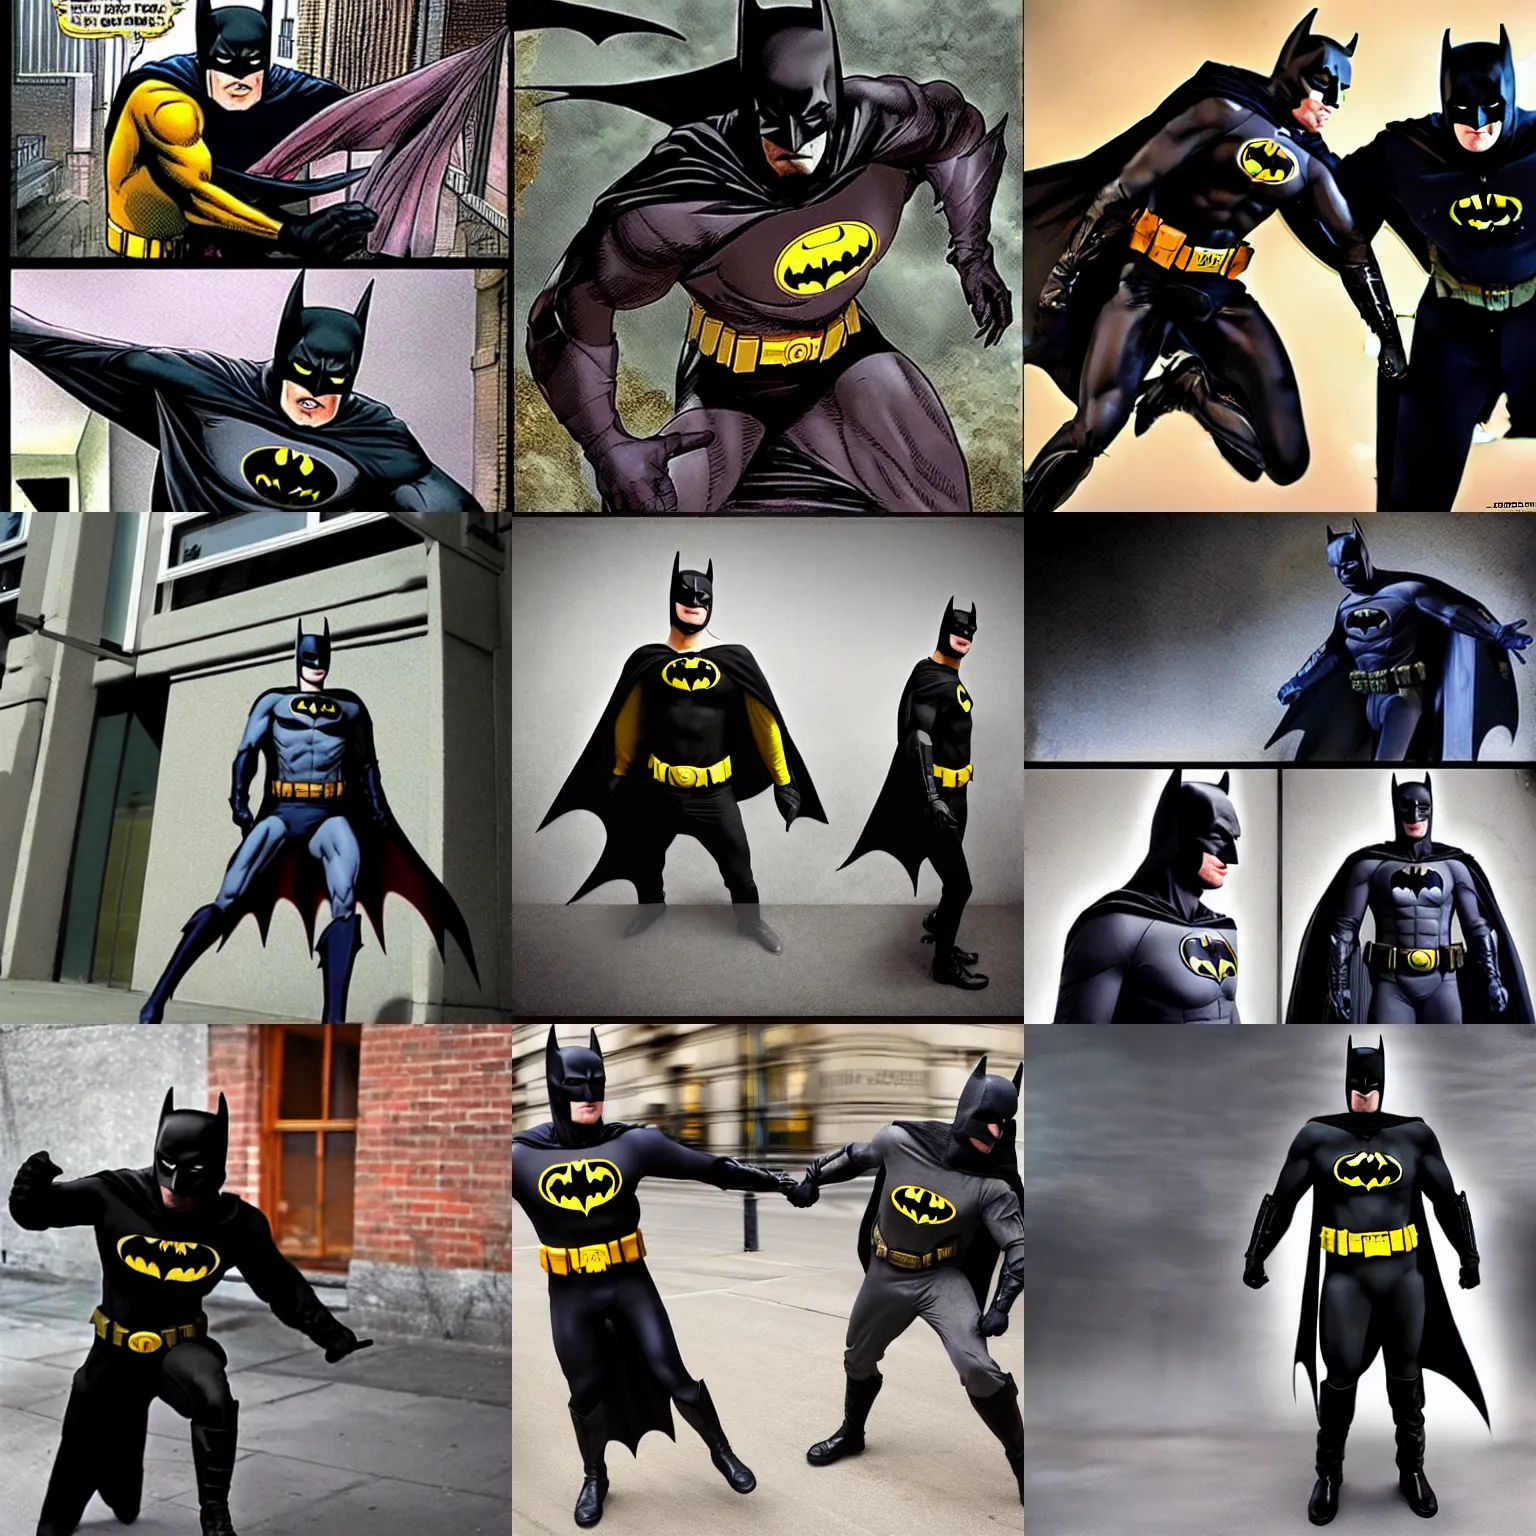 Prompt: a sentient headless Batman suit attacks criminals, photograph, realistic, high definition, funny, dramatic